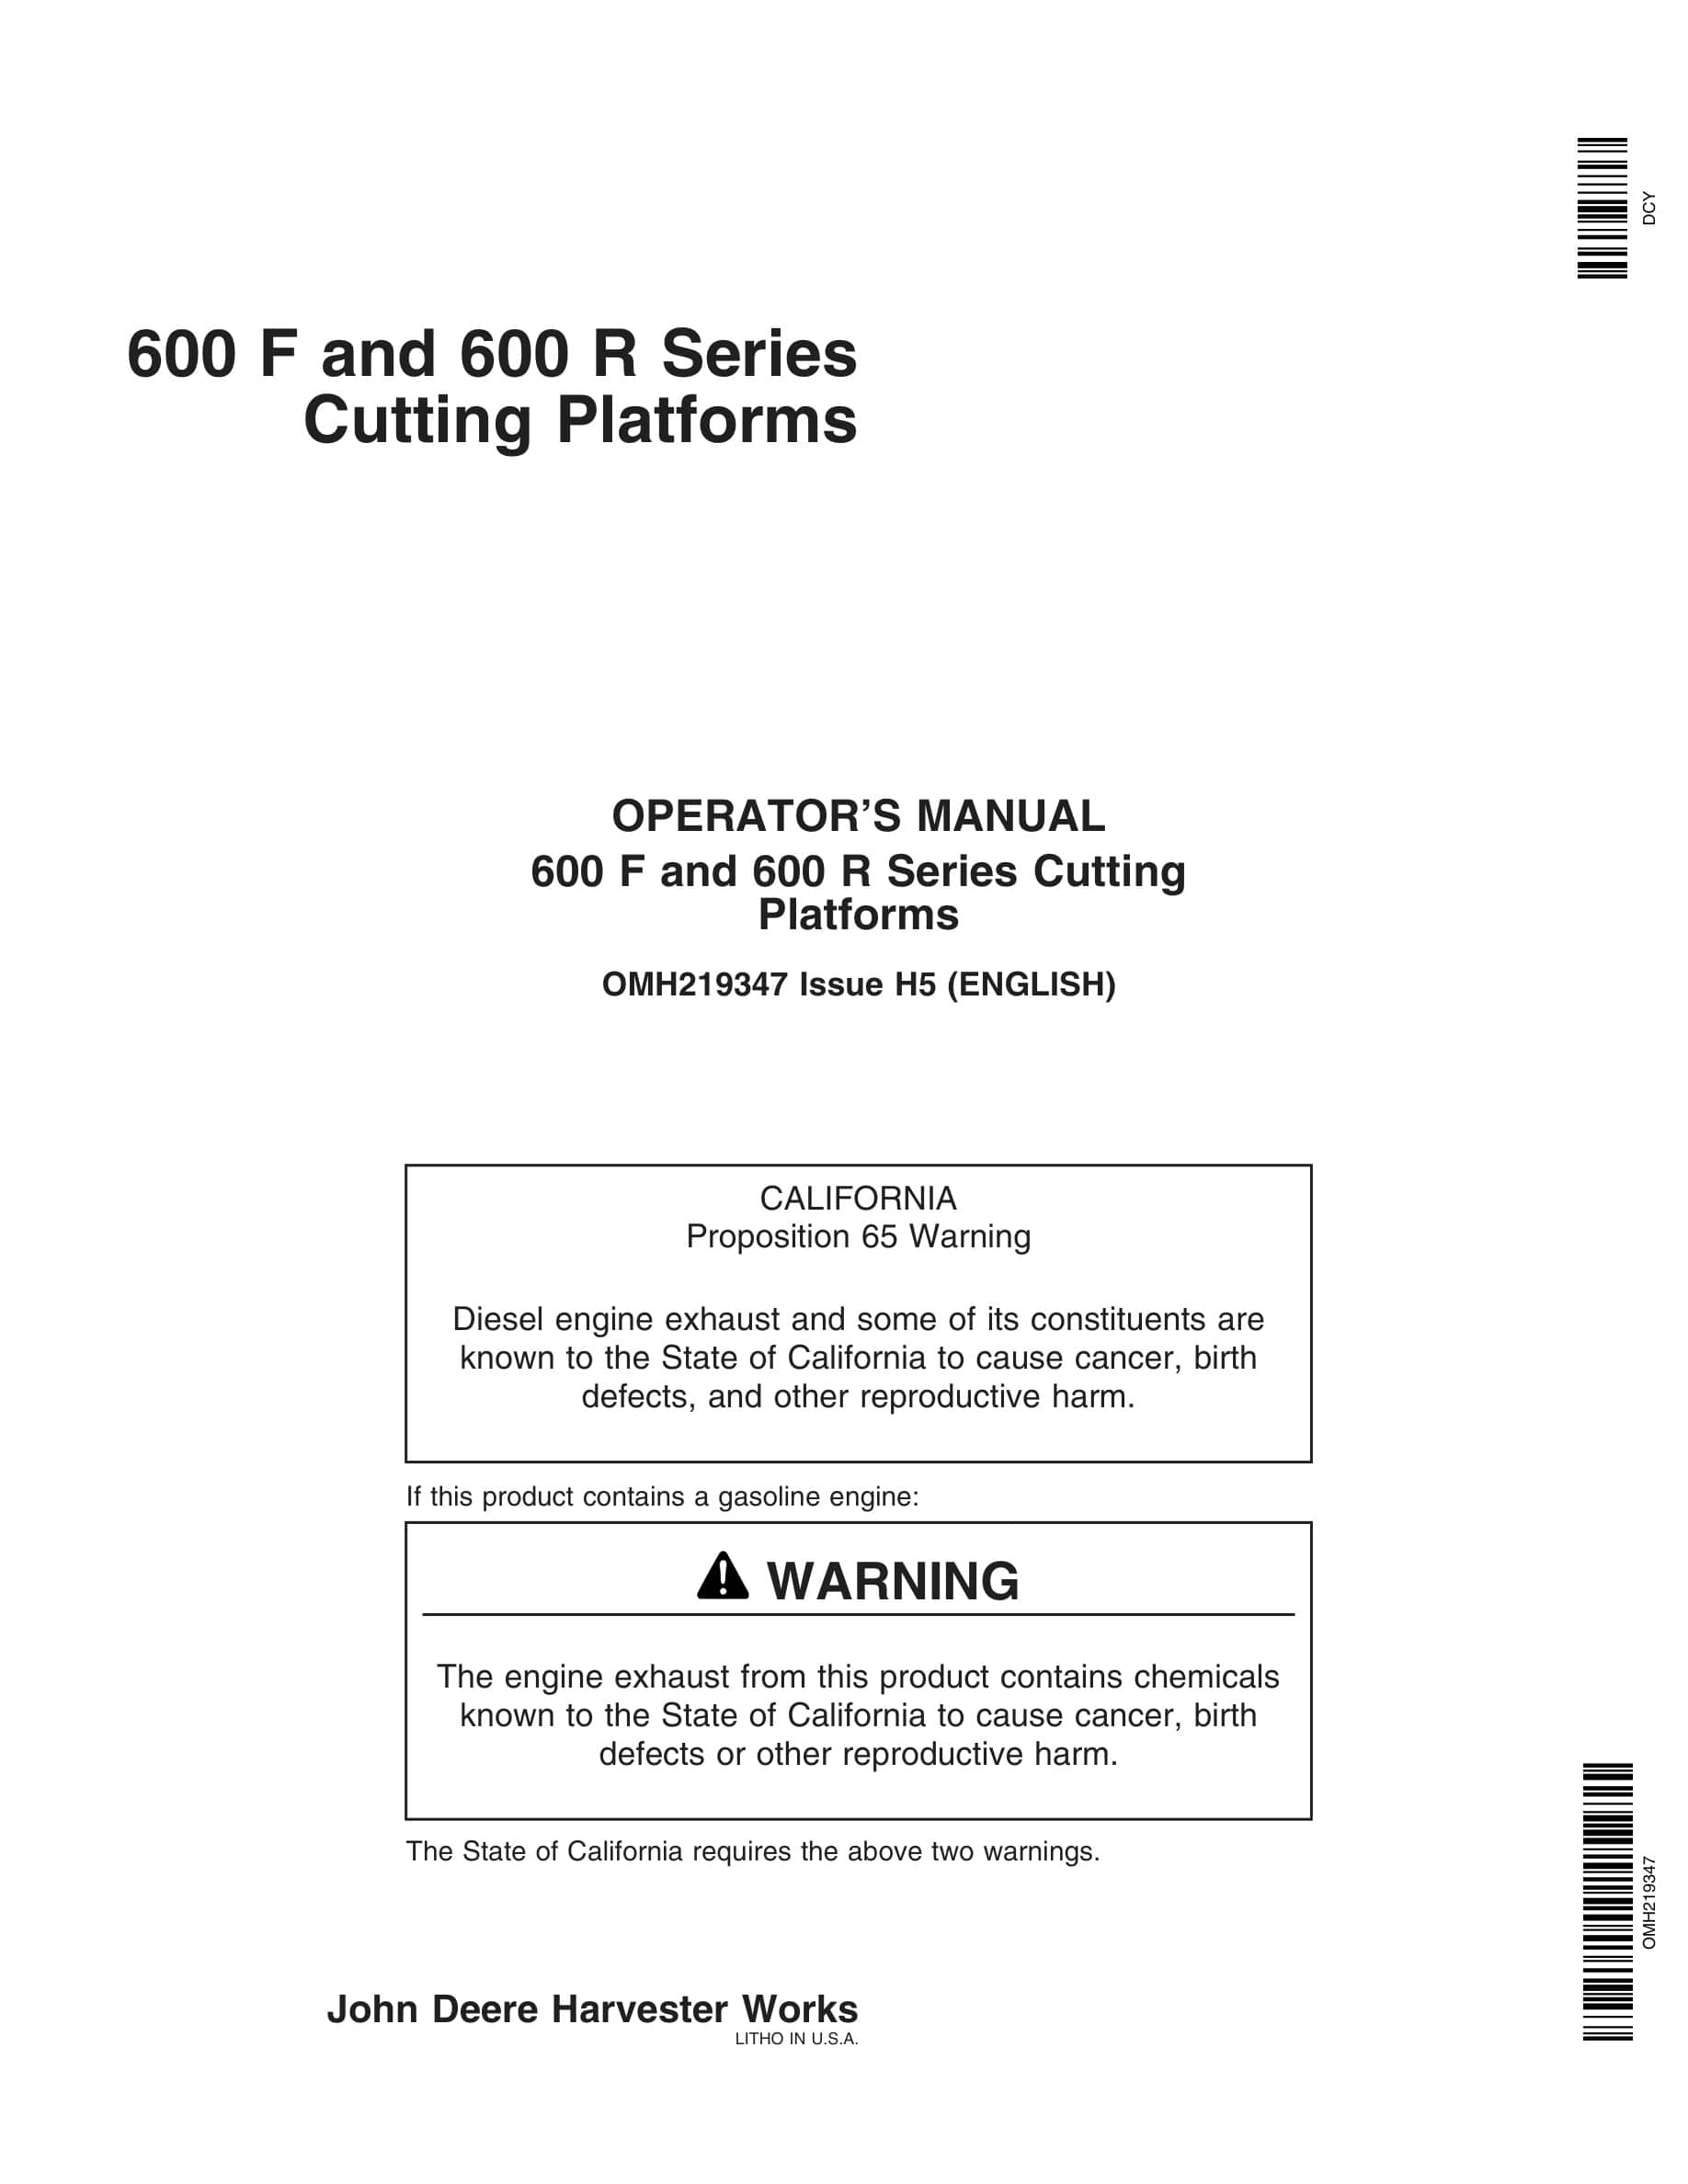 John Deere 600 F and 600 R Series Cutting Platforms Operator Manual OMH219347-1